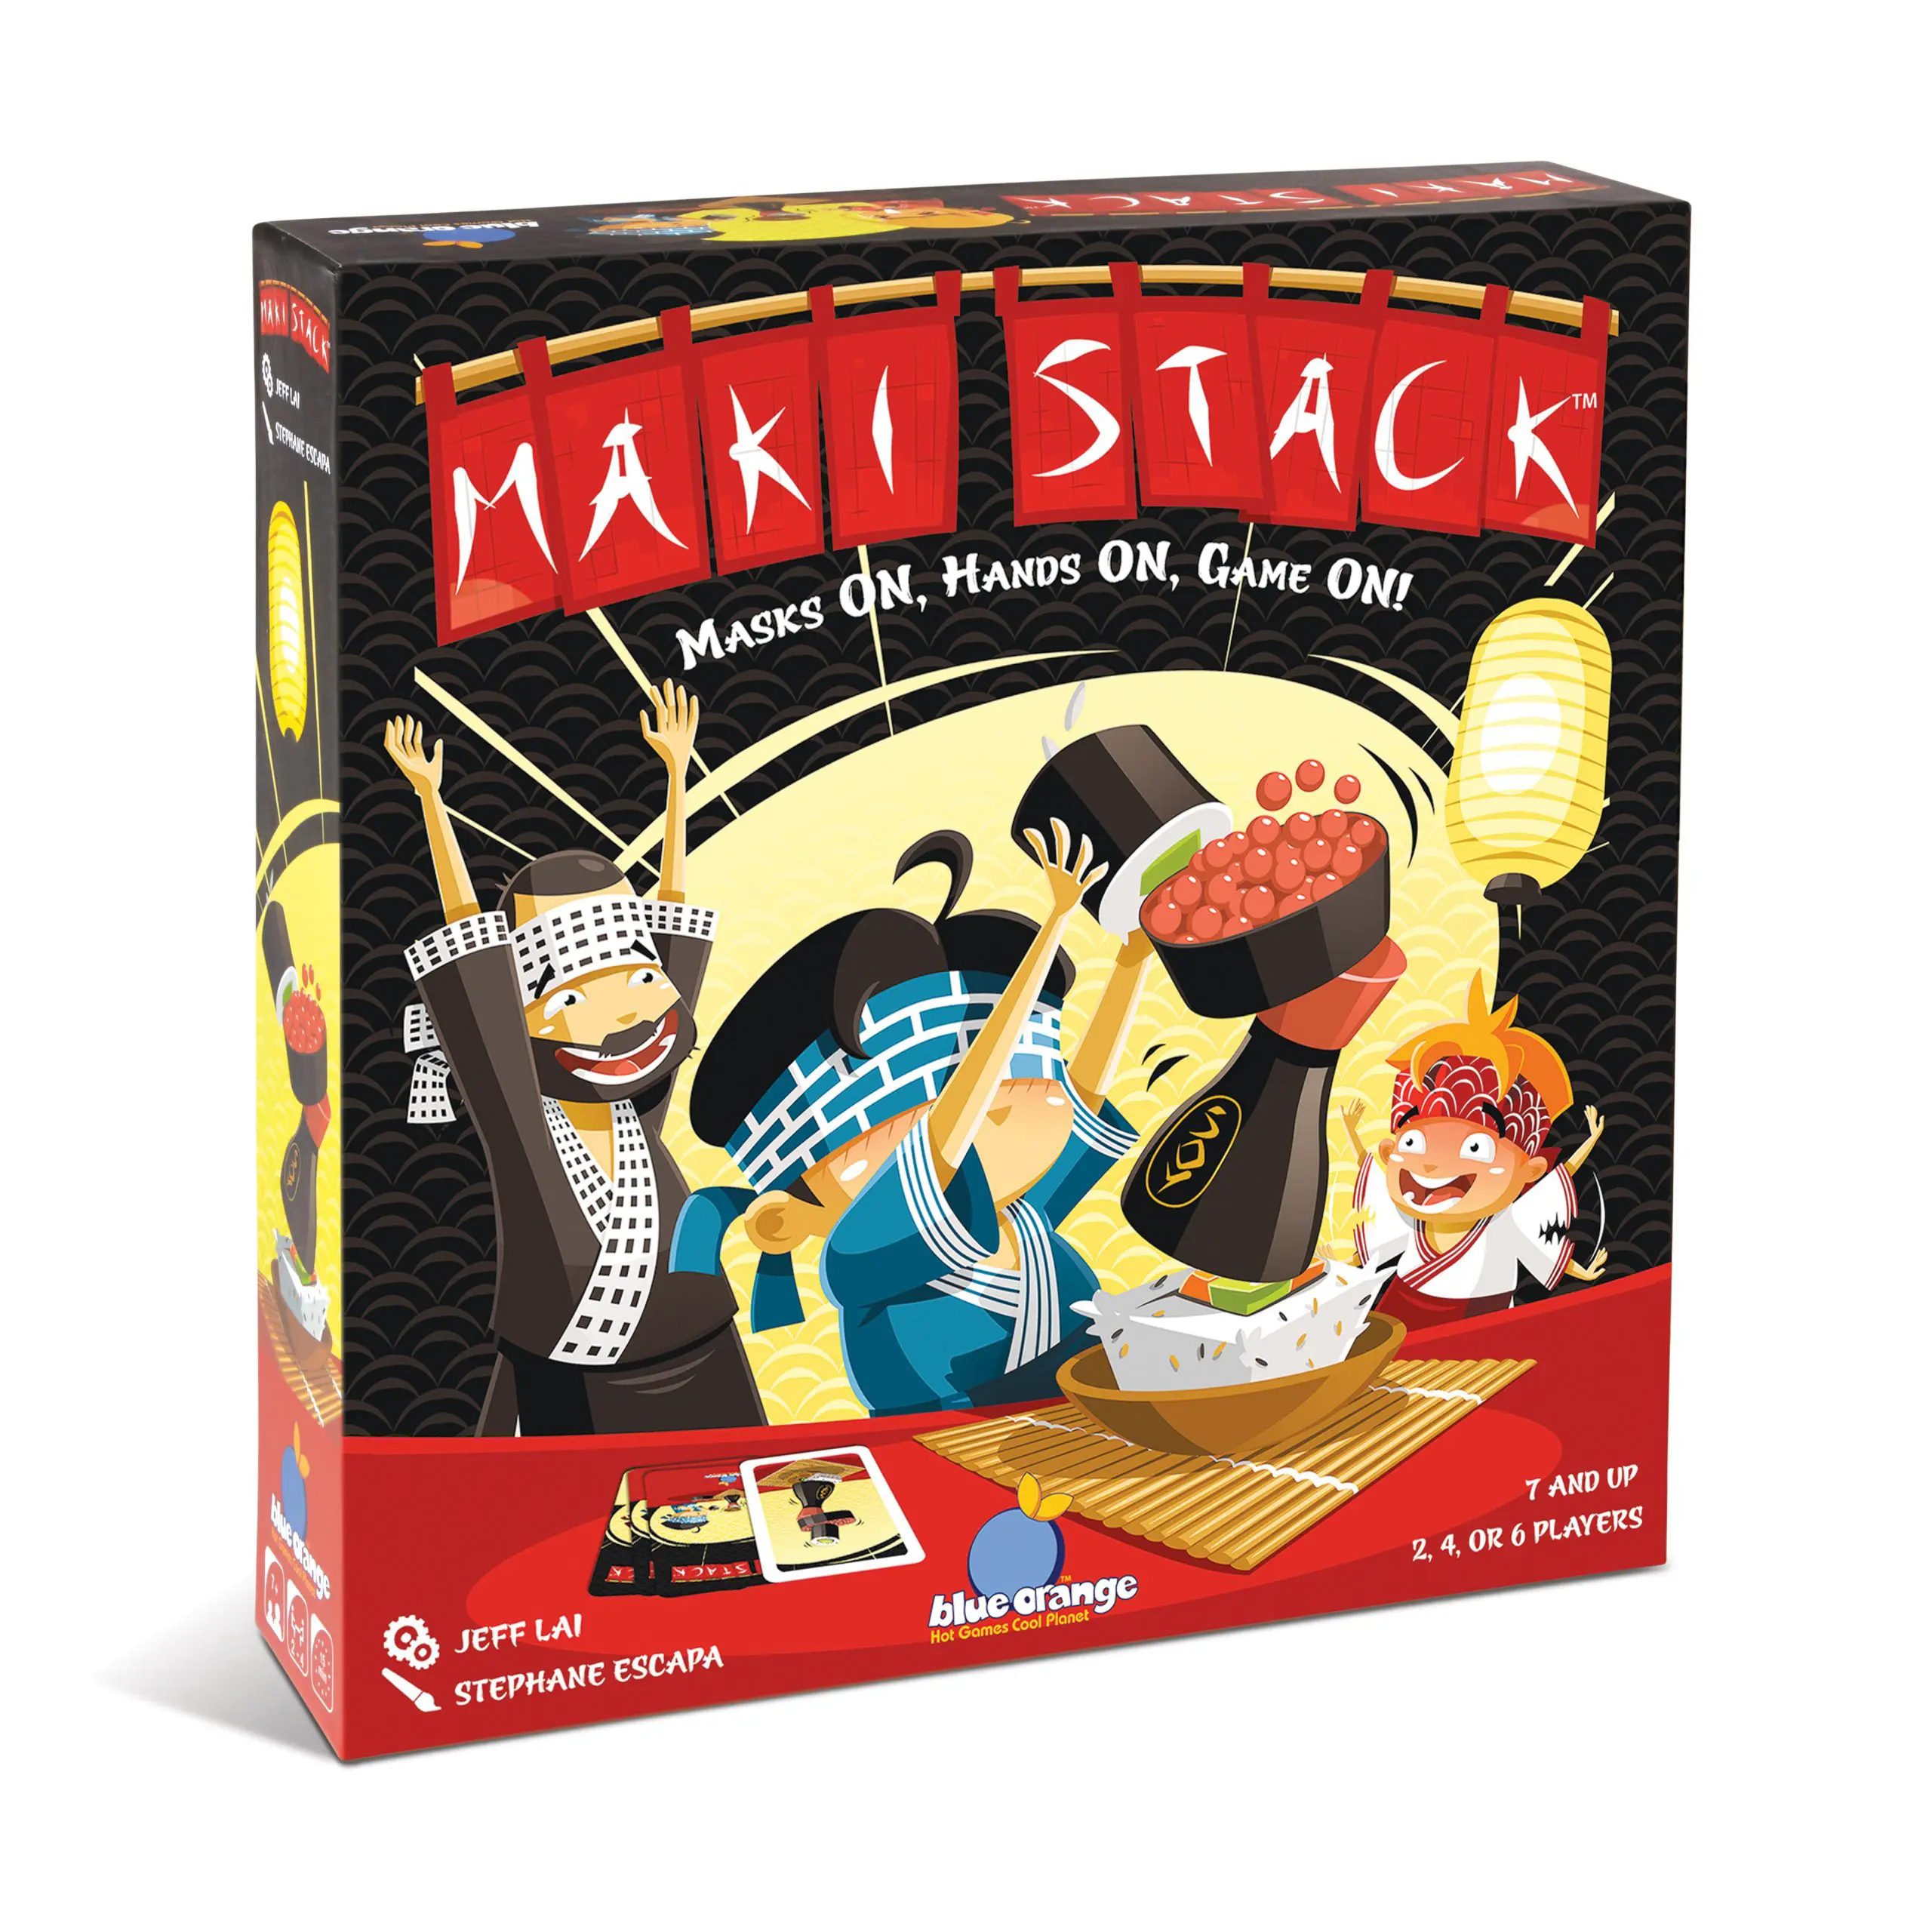 Maki Stack board game